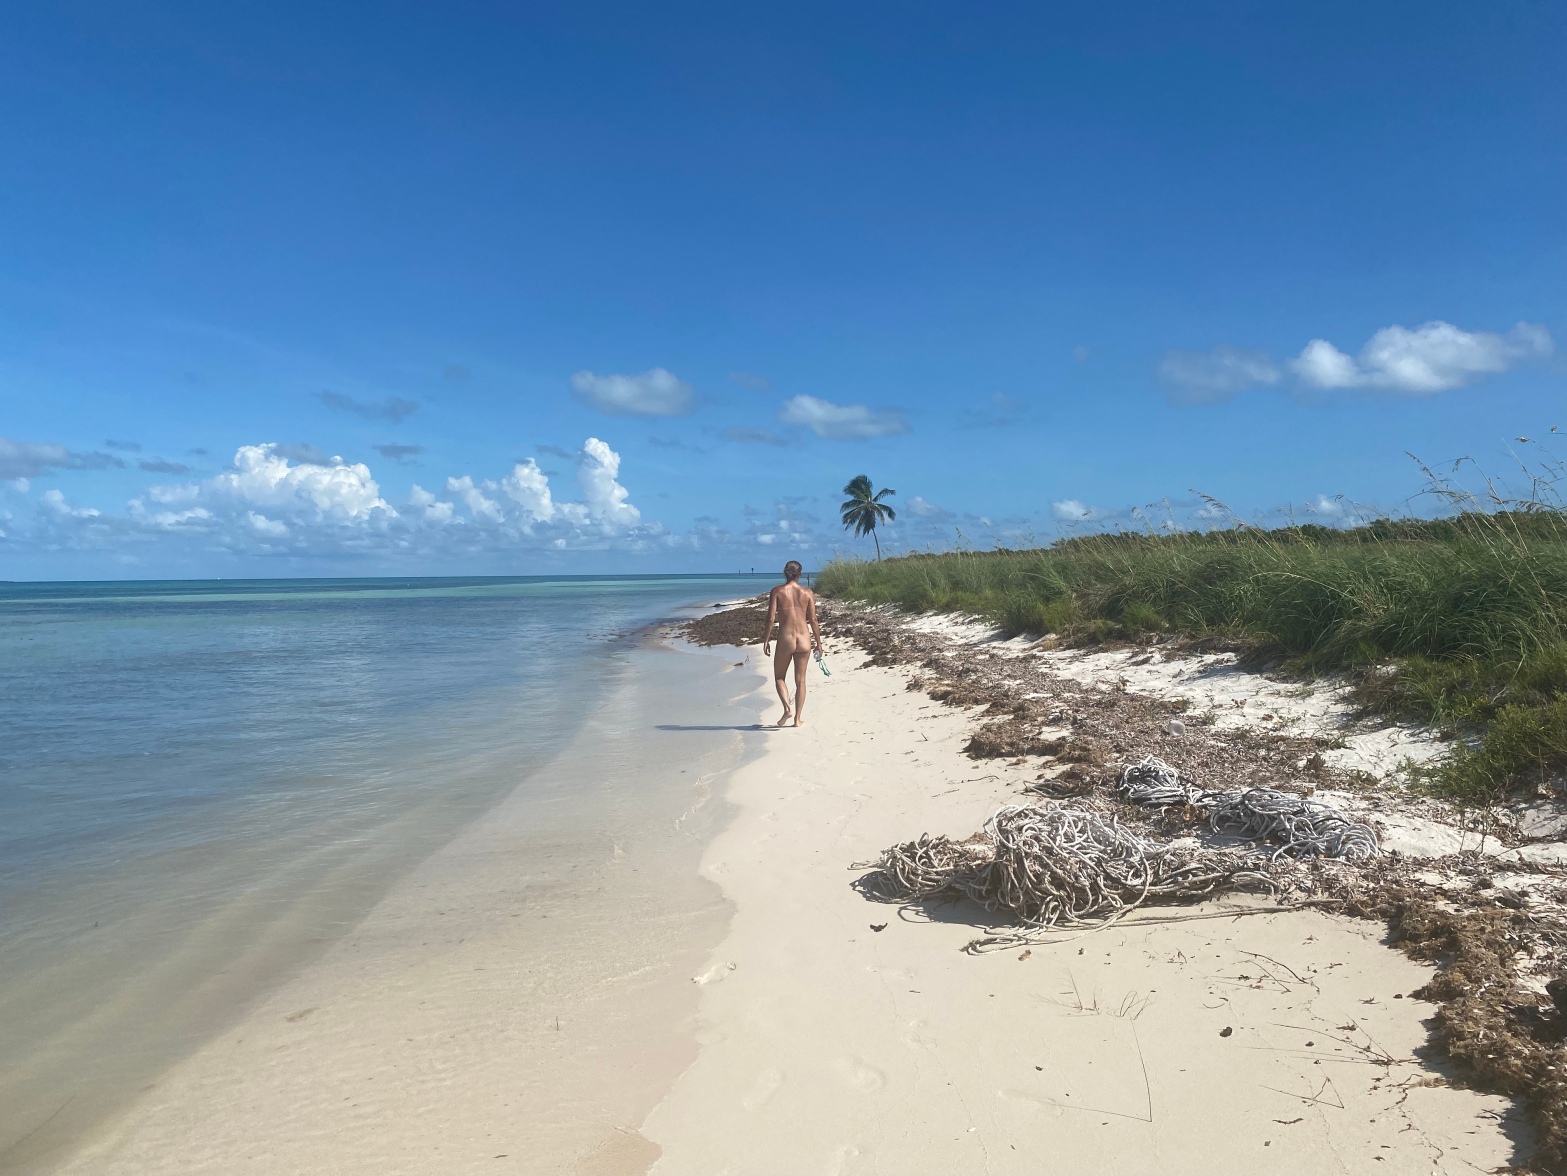 annemarie meiring recommends Nude Beach Florida Keys